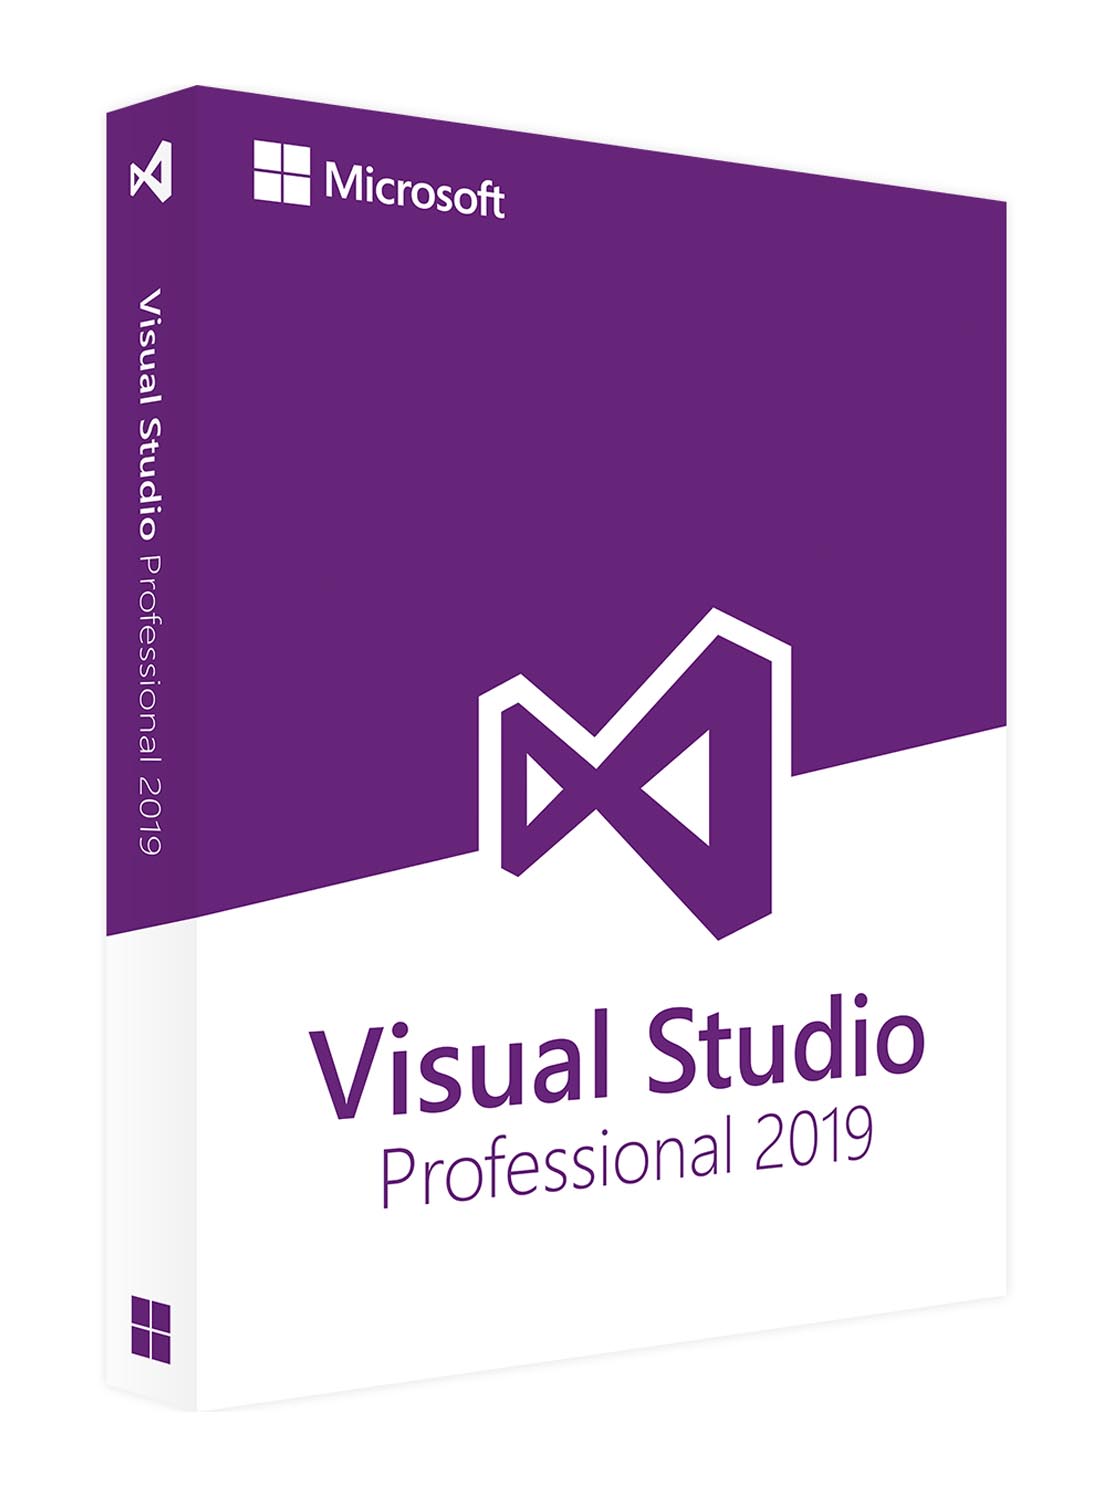 download visual studio 2019 professional